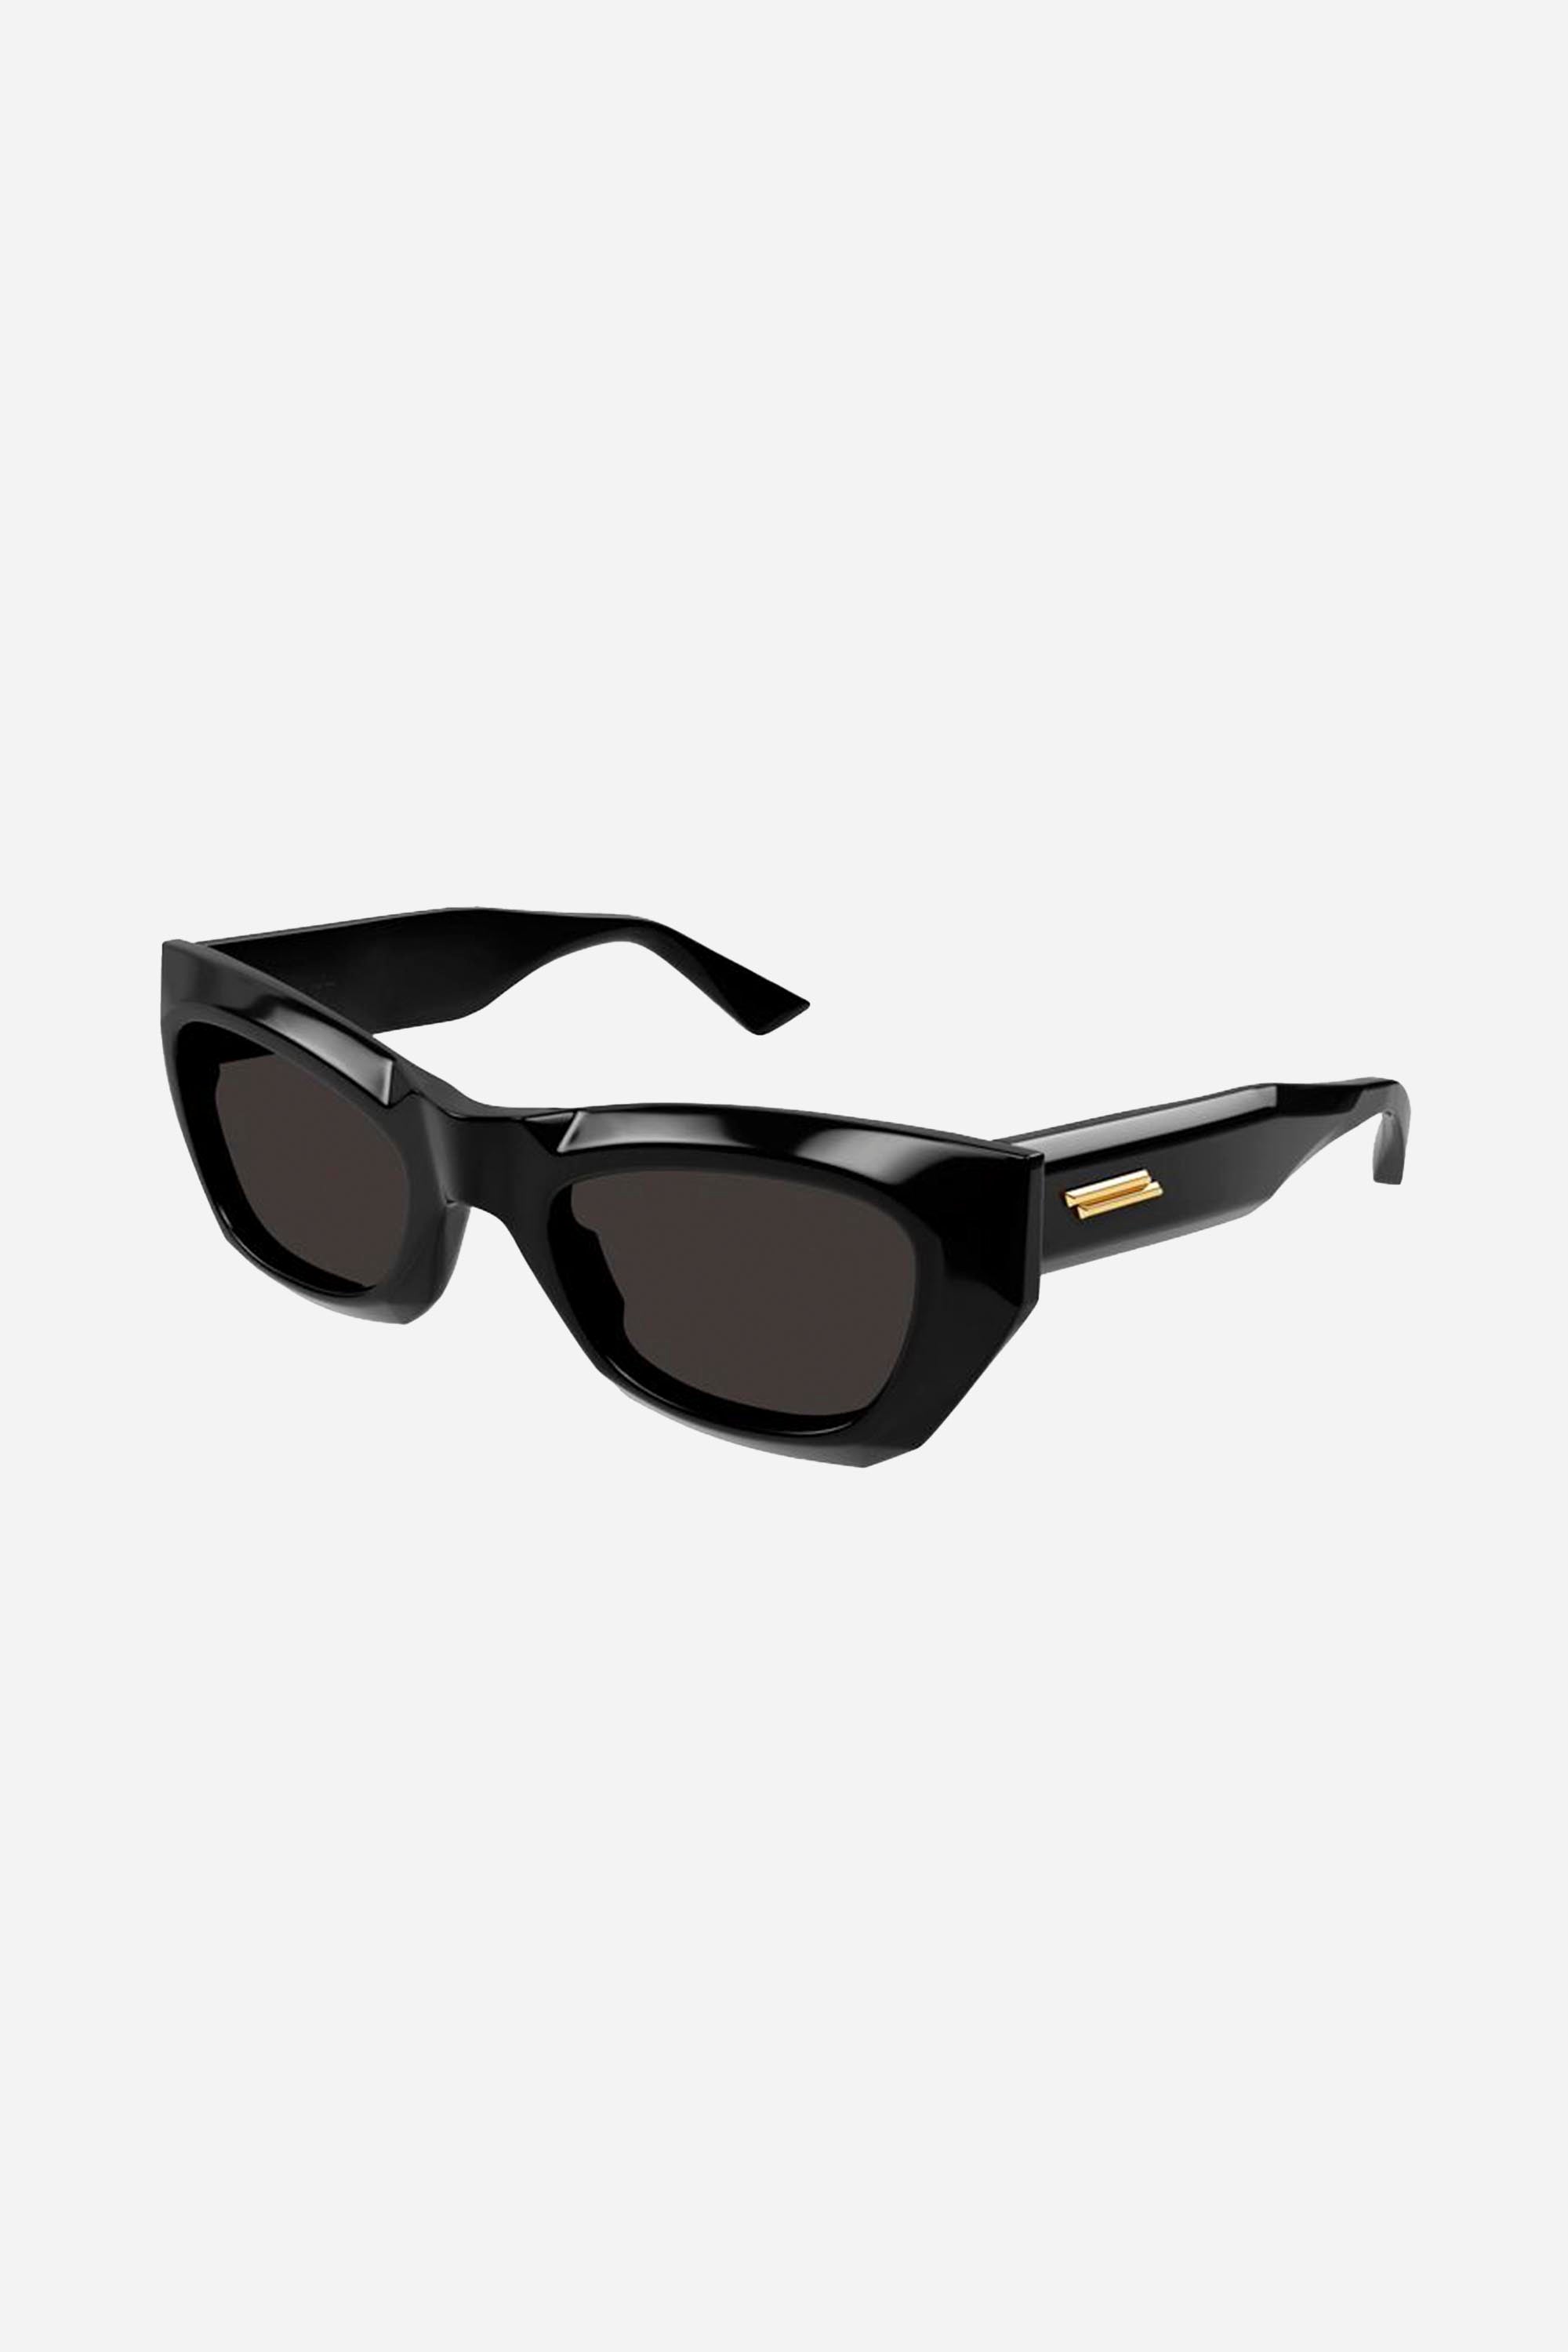 Bottega Veneta bold wrap black sunglasses - Eyewear Club